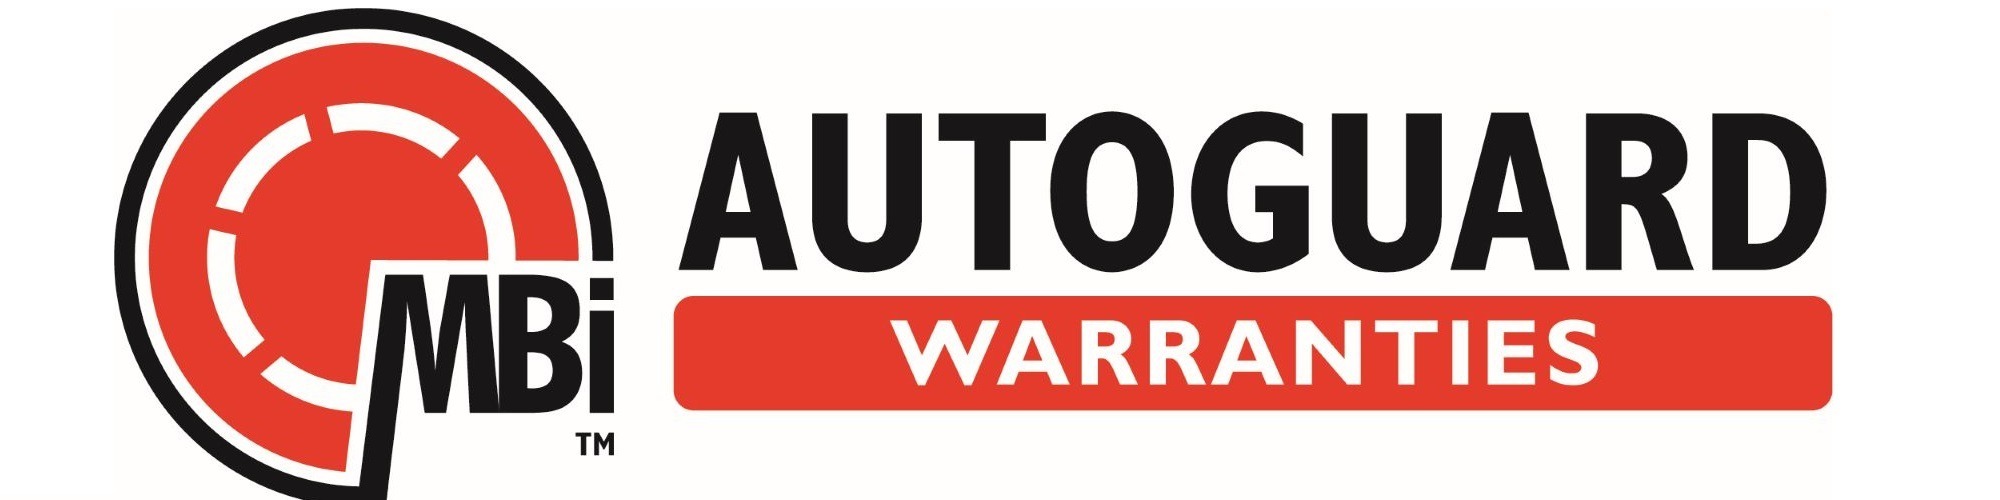 Autoguard Warranties at Quarterbridge Cars, Brighouse